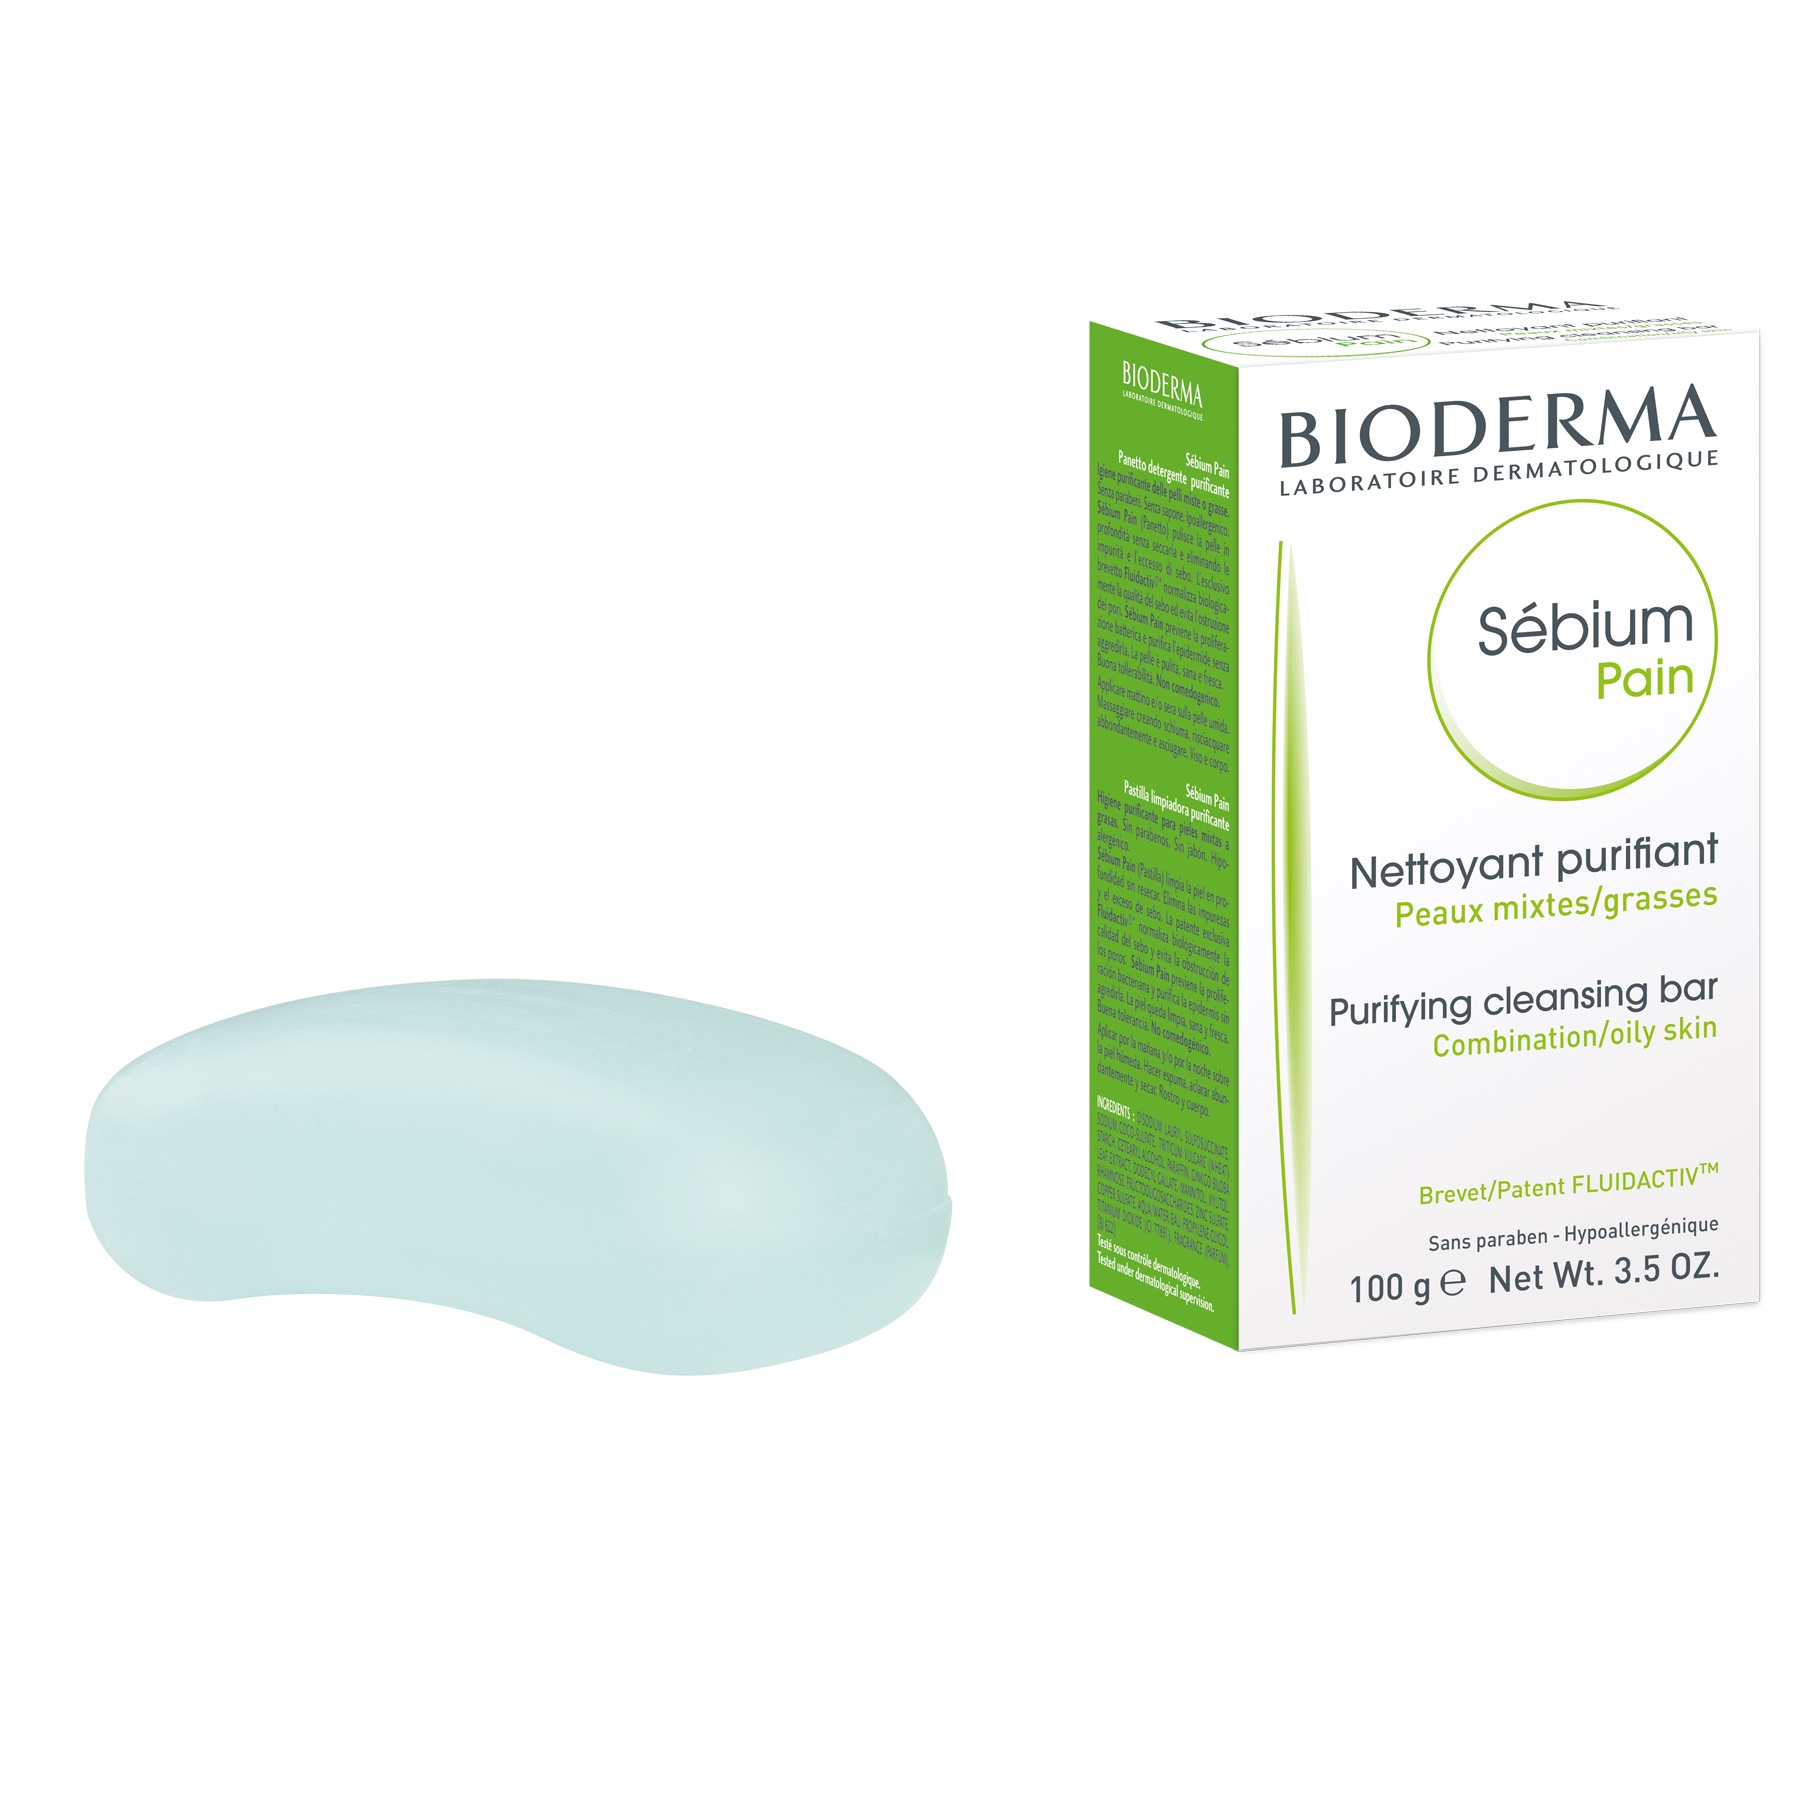 Мыло Bioderma Sebium Pain, 100 г (028613) - фото 1